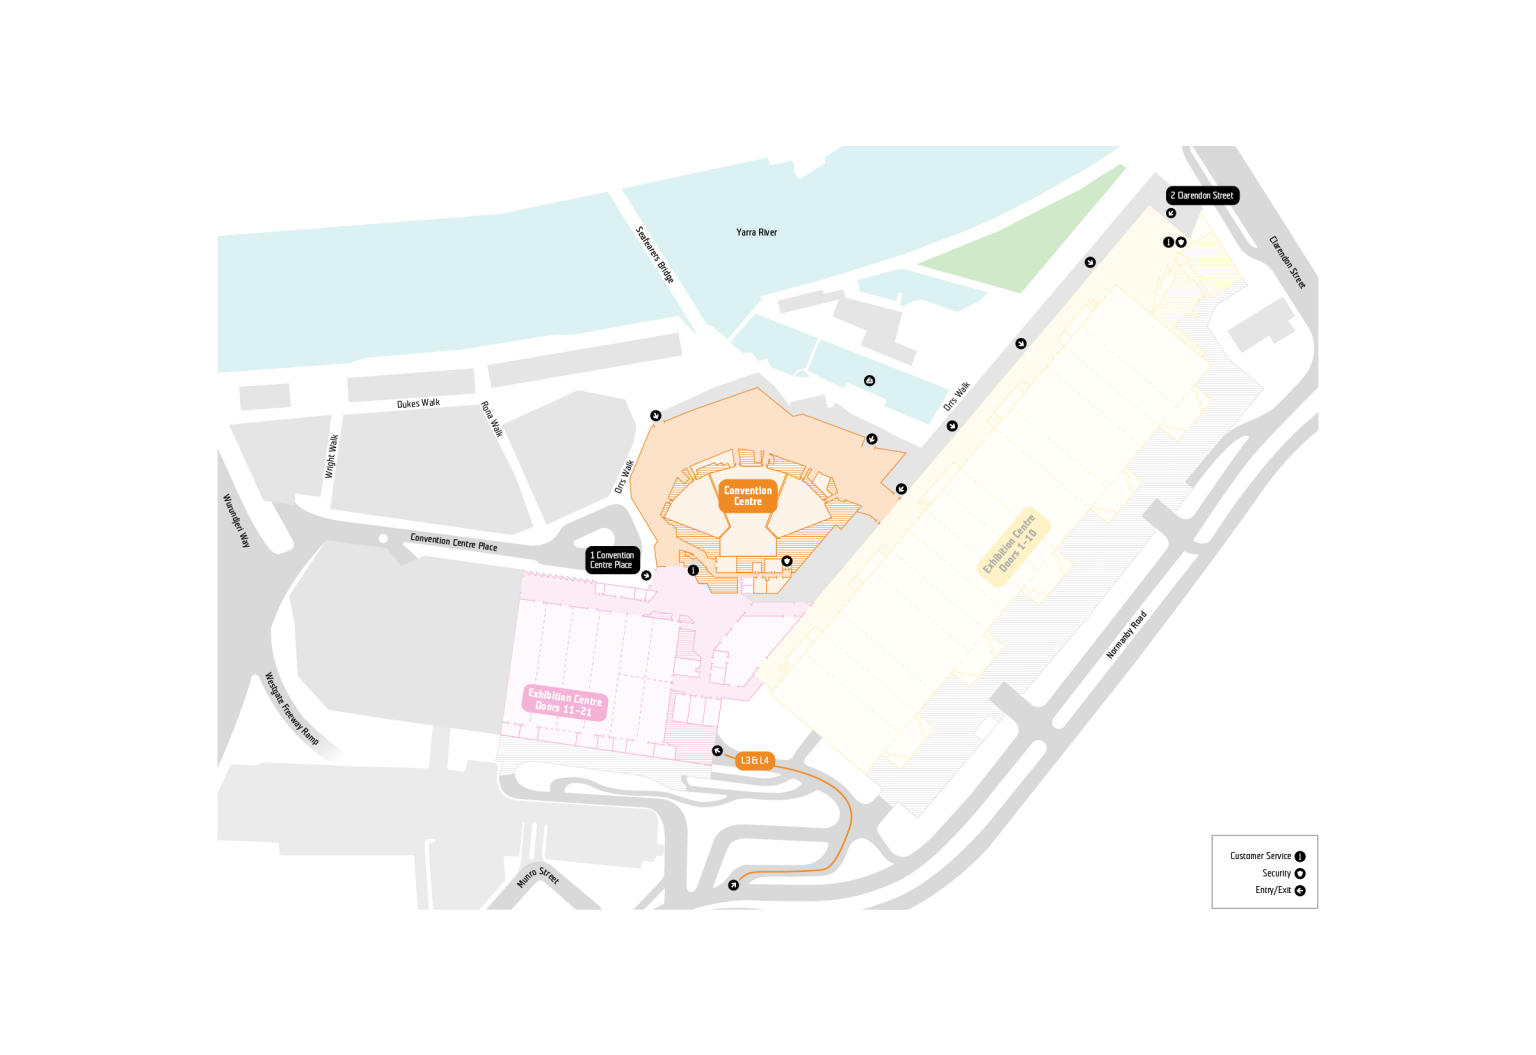 Melbourne Convention Centre loading dock map